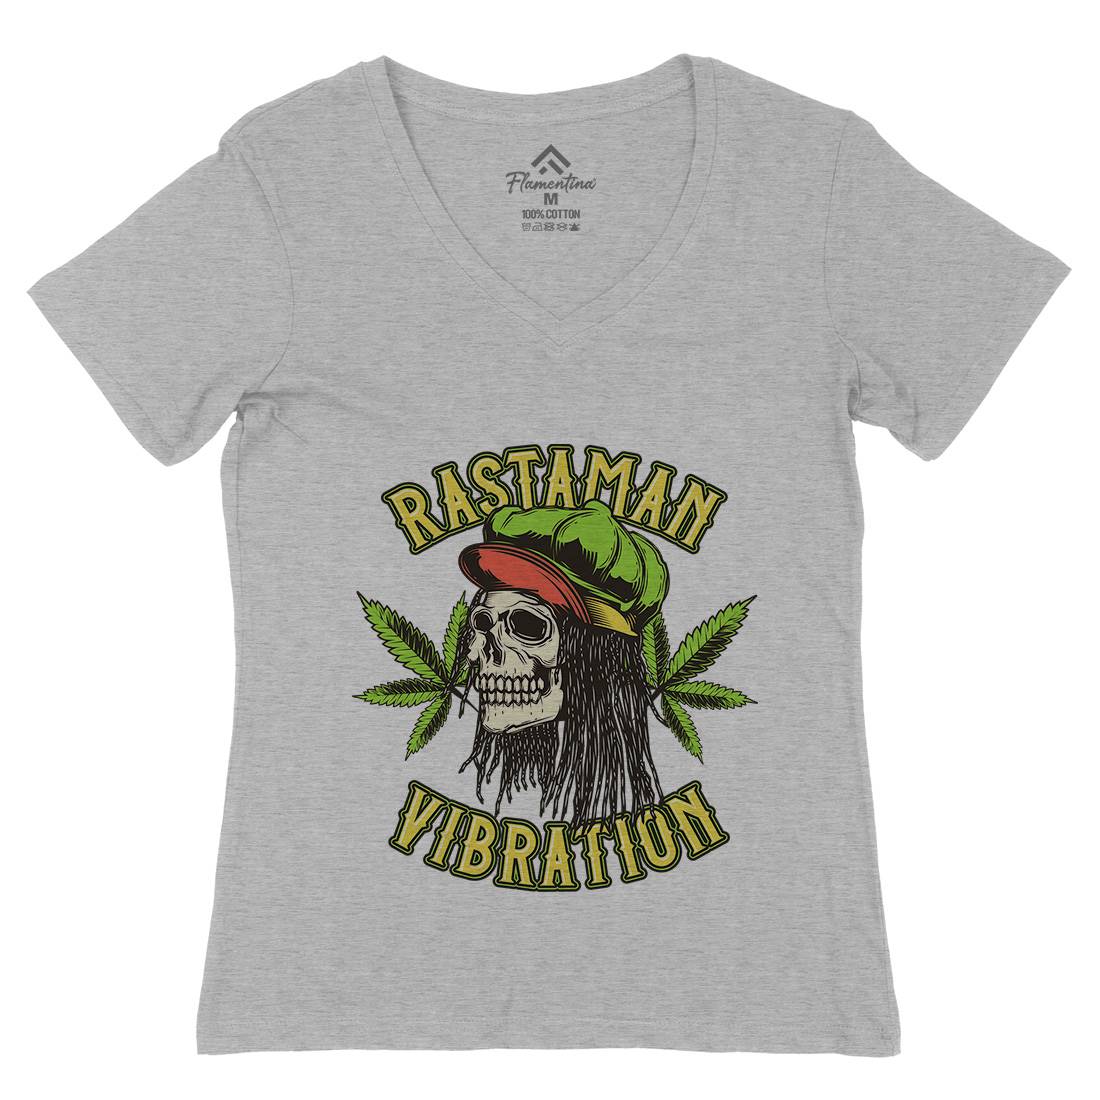 Rastaman Vibration Womens Organic V-Neck T-Shirt Drugs B805